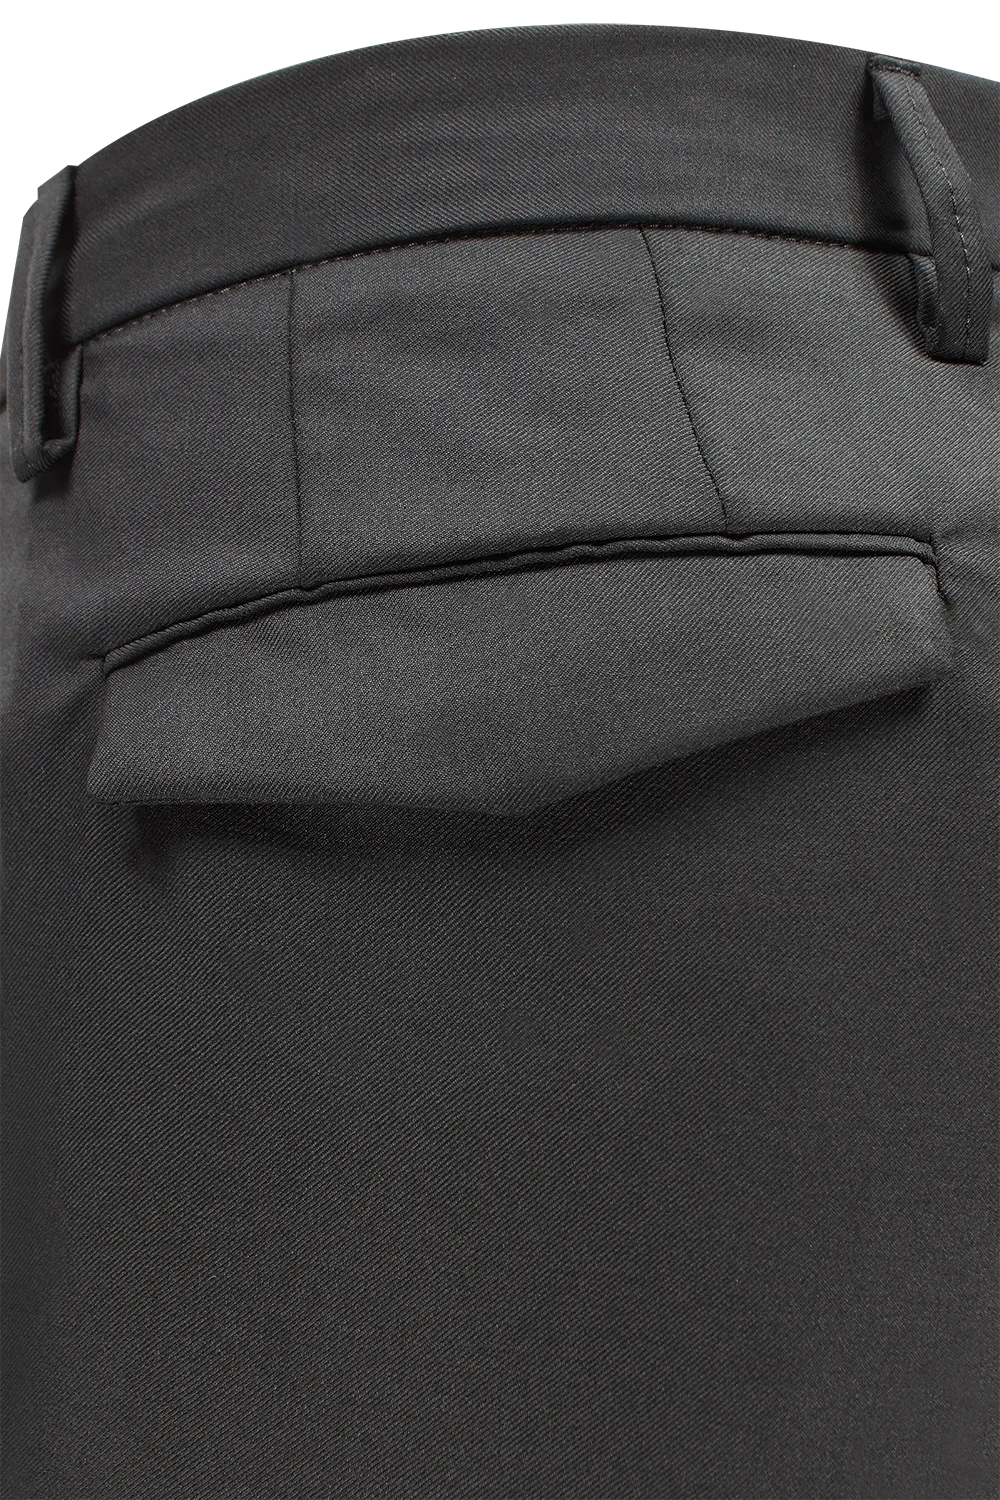 Pantalone con pince incrociata in lana nera tasca